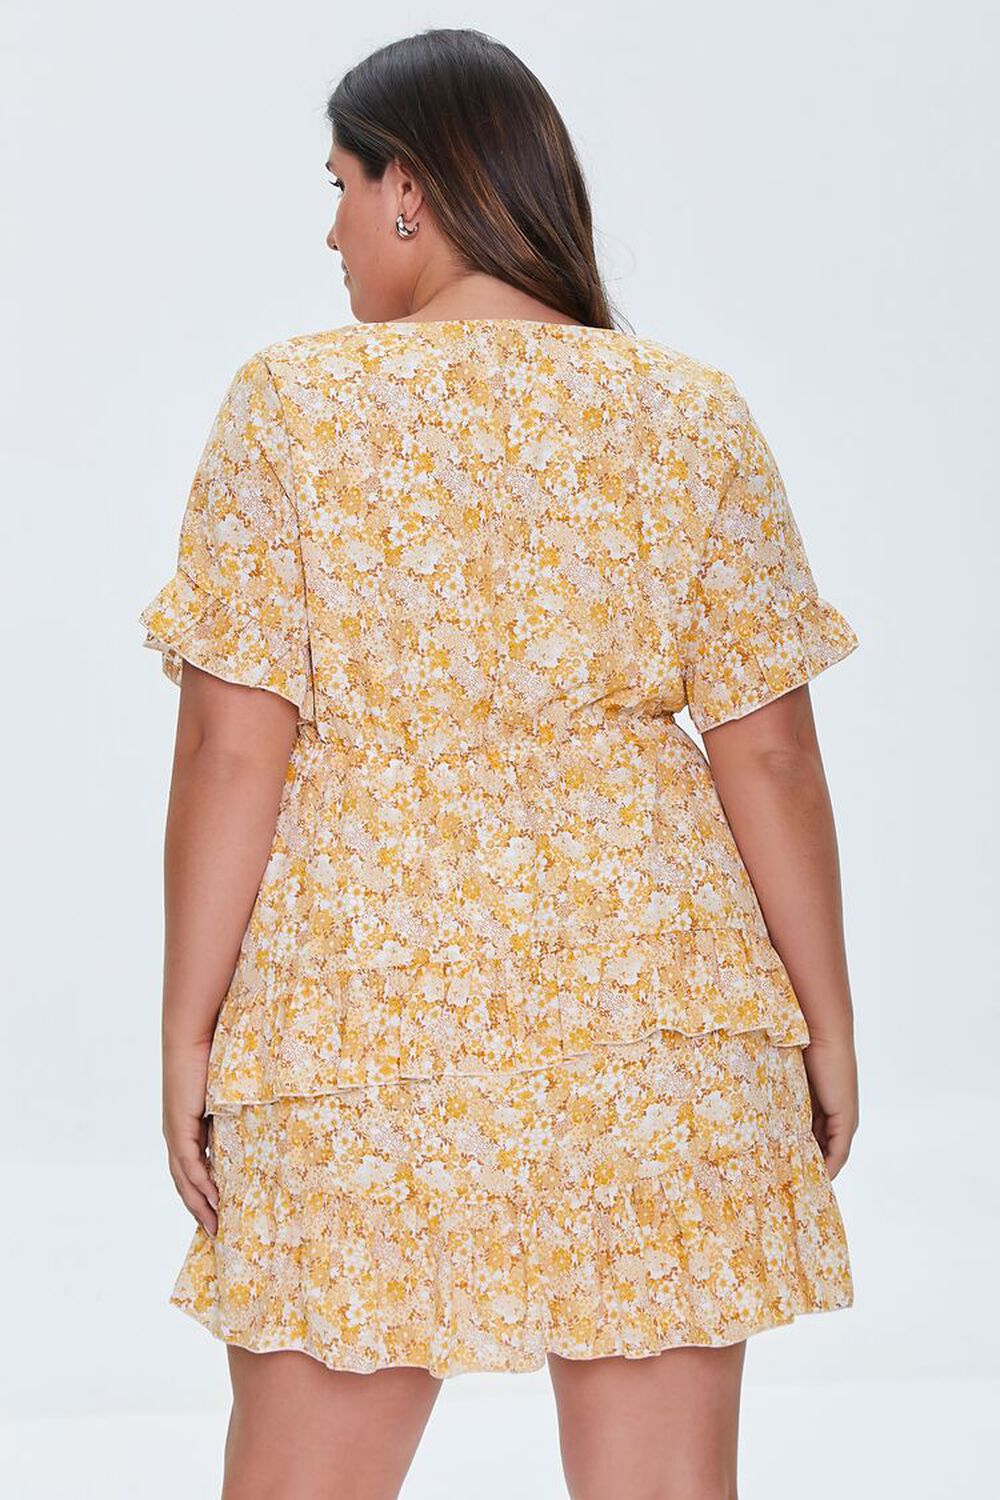 YELLOW/MULTI Plus Size Floral Print Mini Dress, image 3